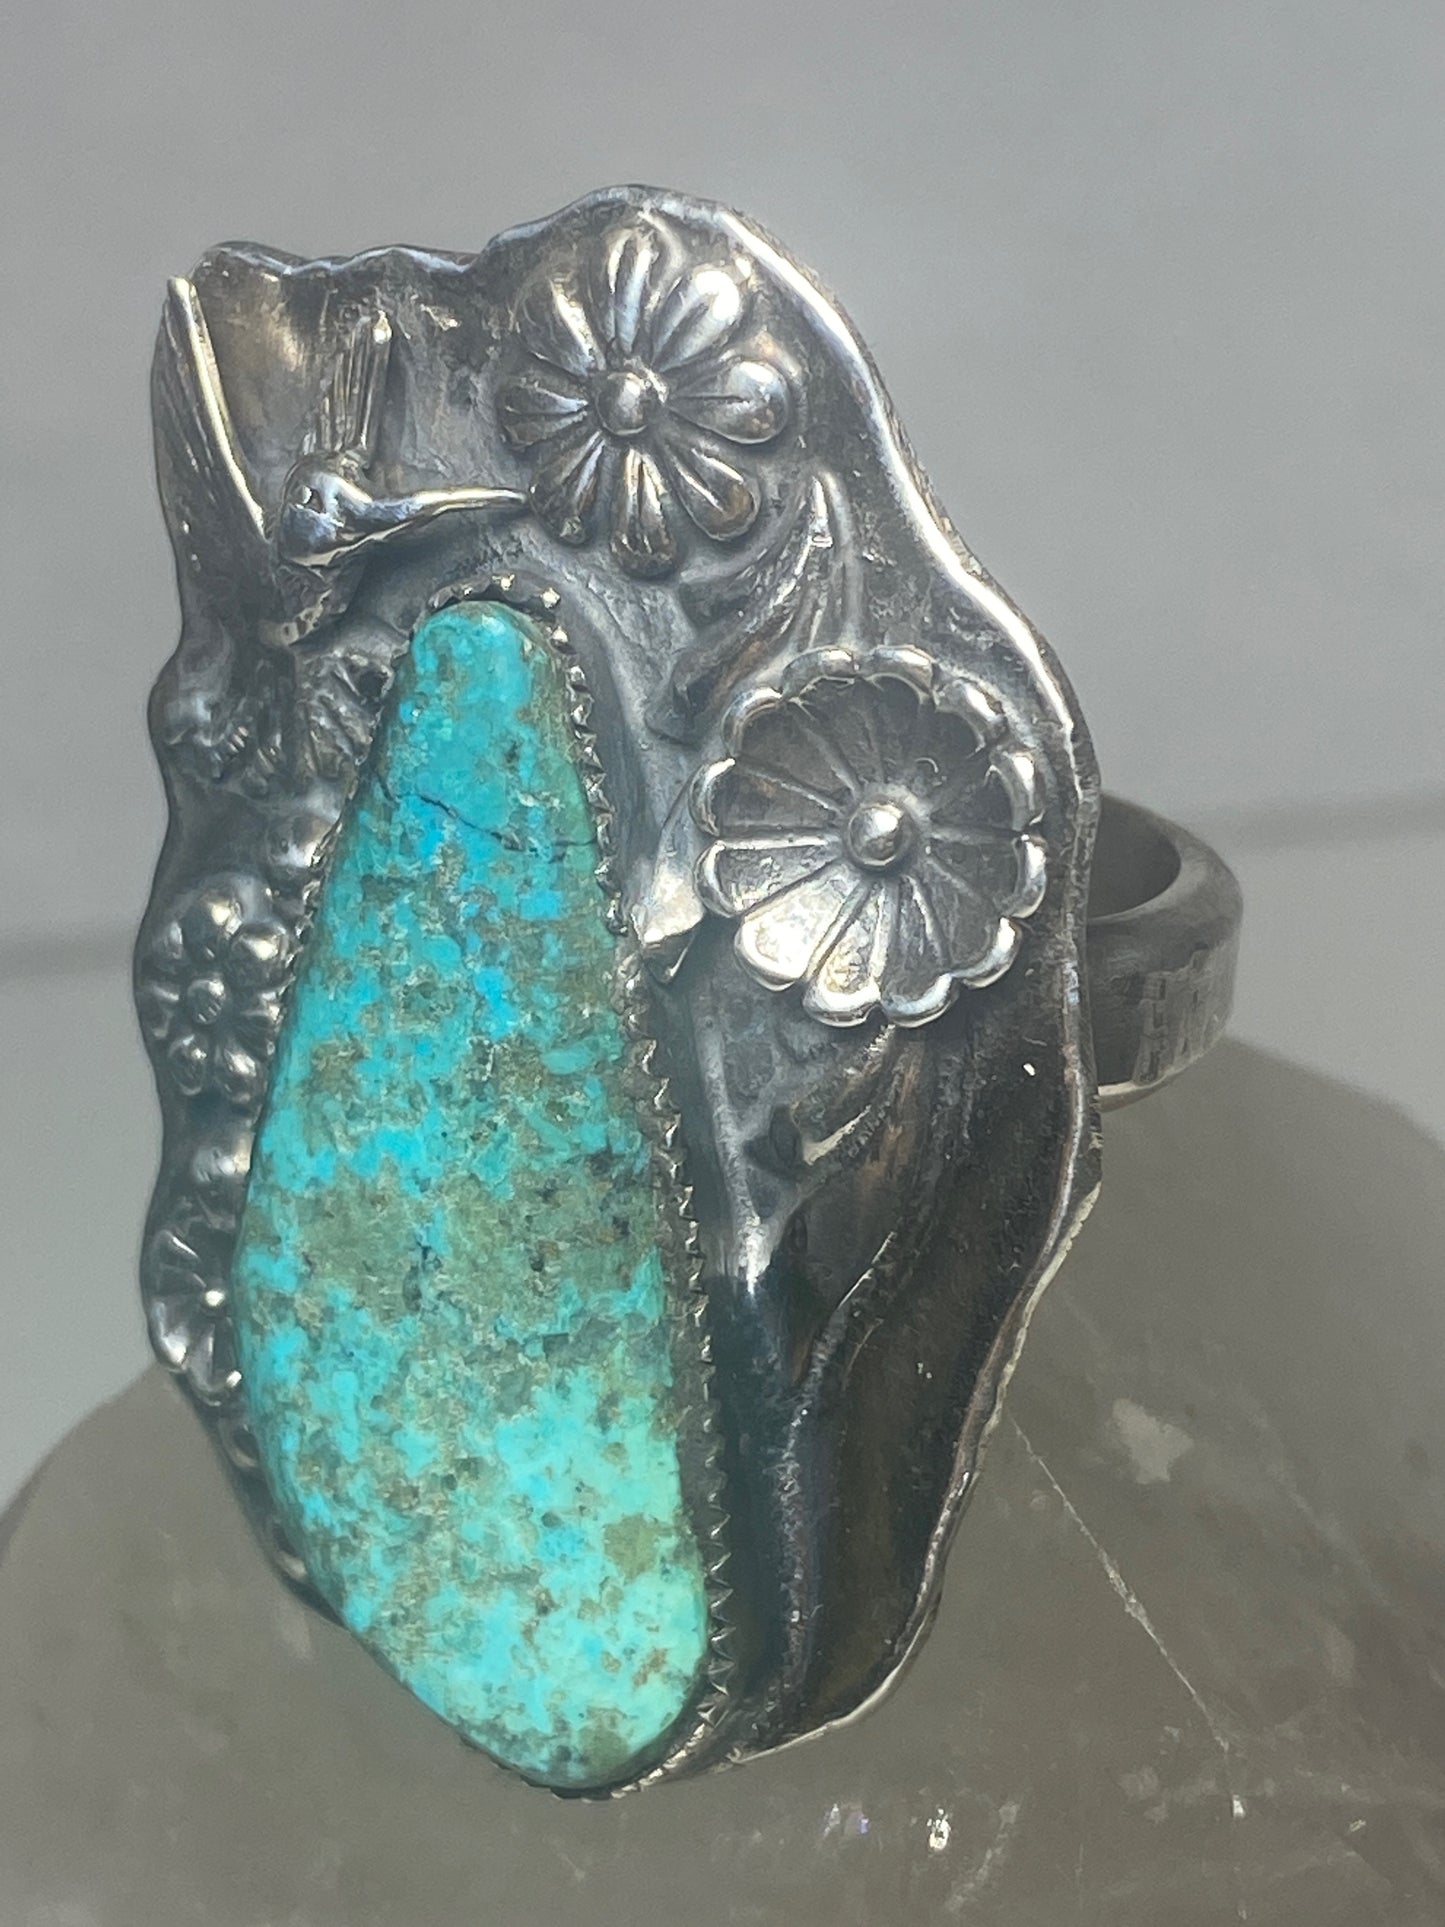 Eagle ? ring turquoise bird hummingbird? squash blossom flower southwest sterling silver